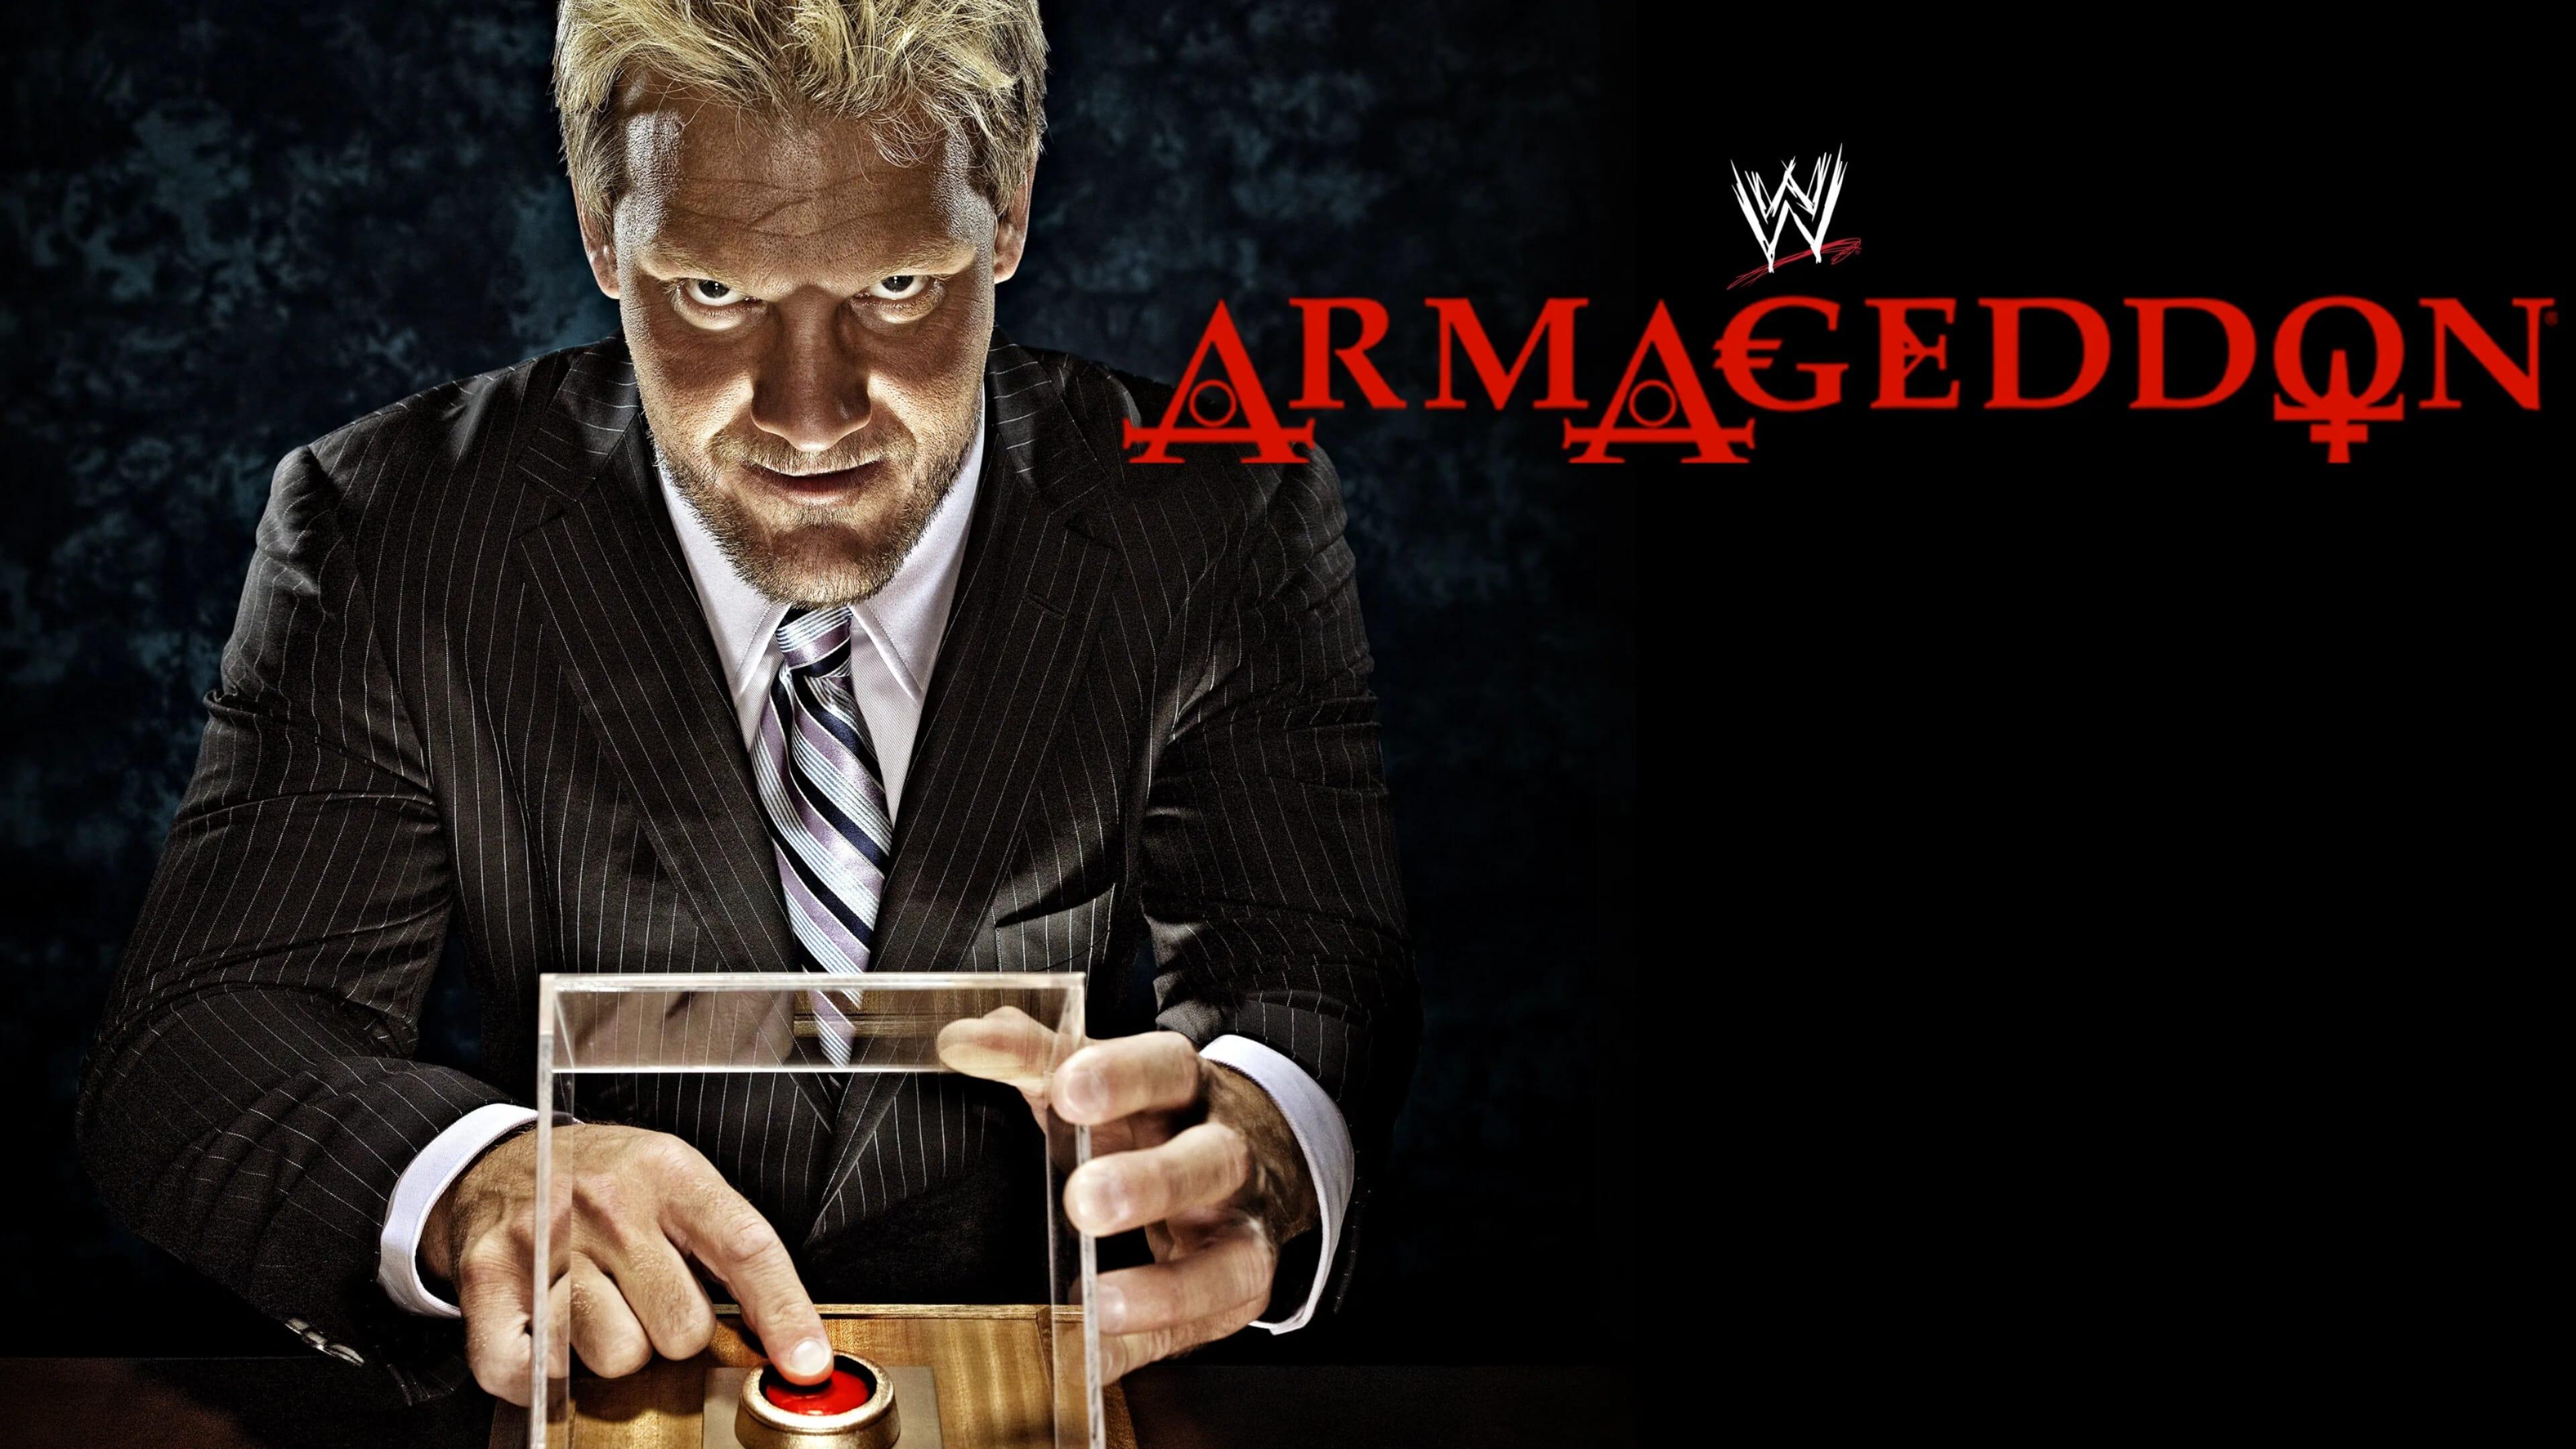 WWE Armageddon 2008 backdrop